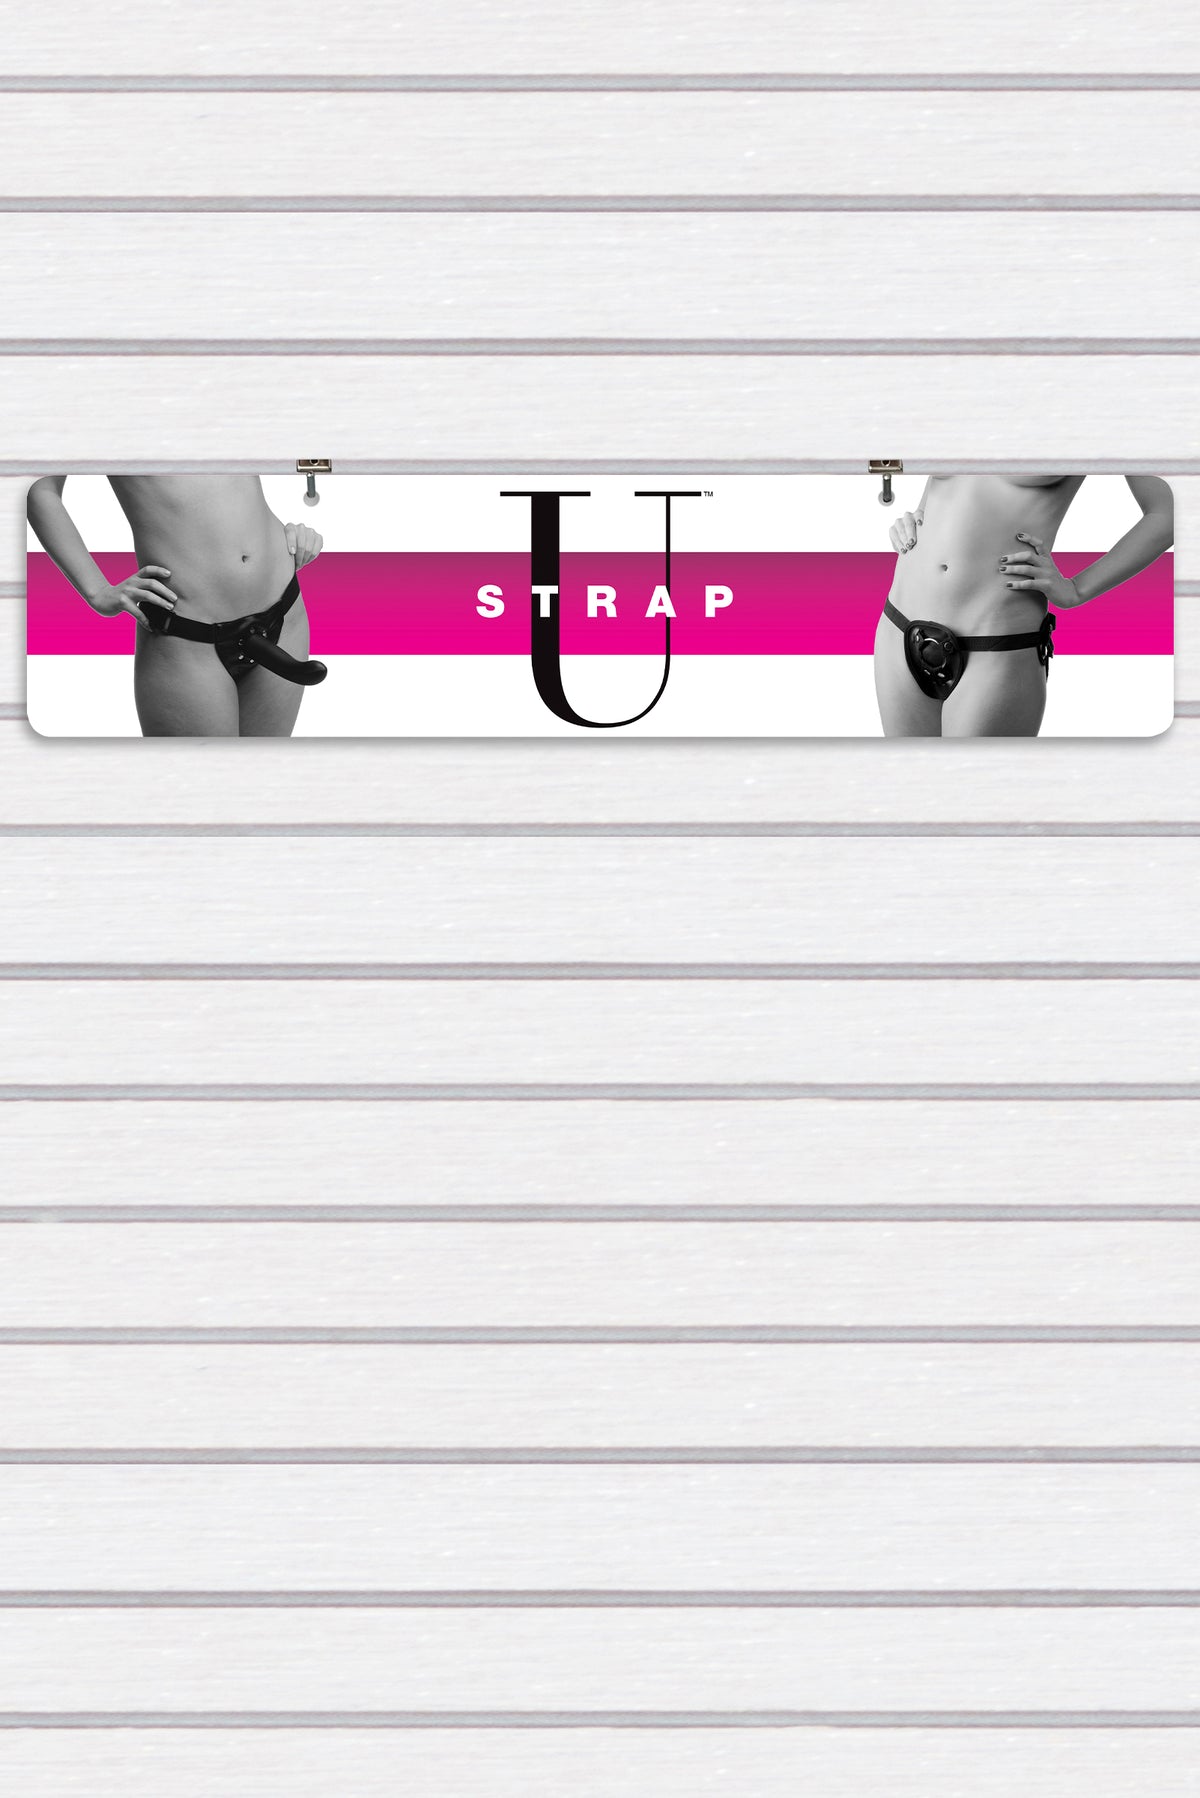 Strap U Display Sign